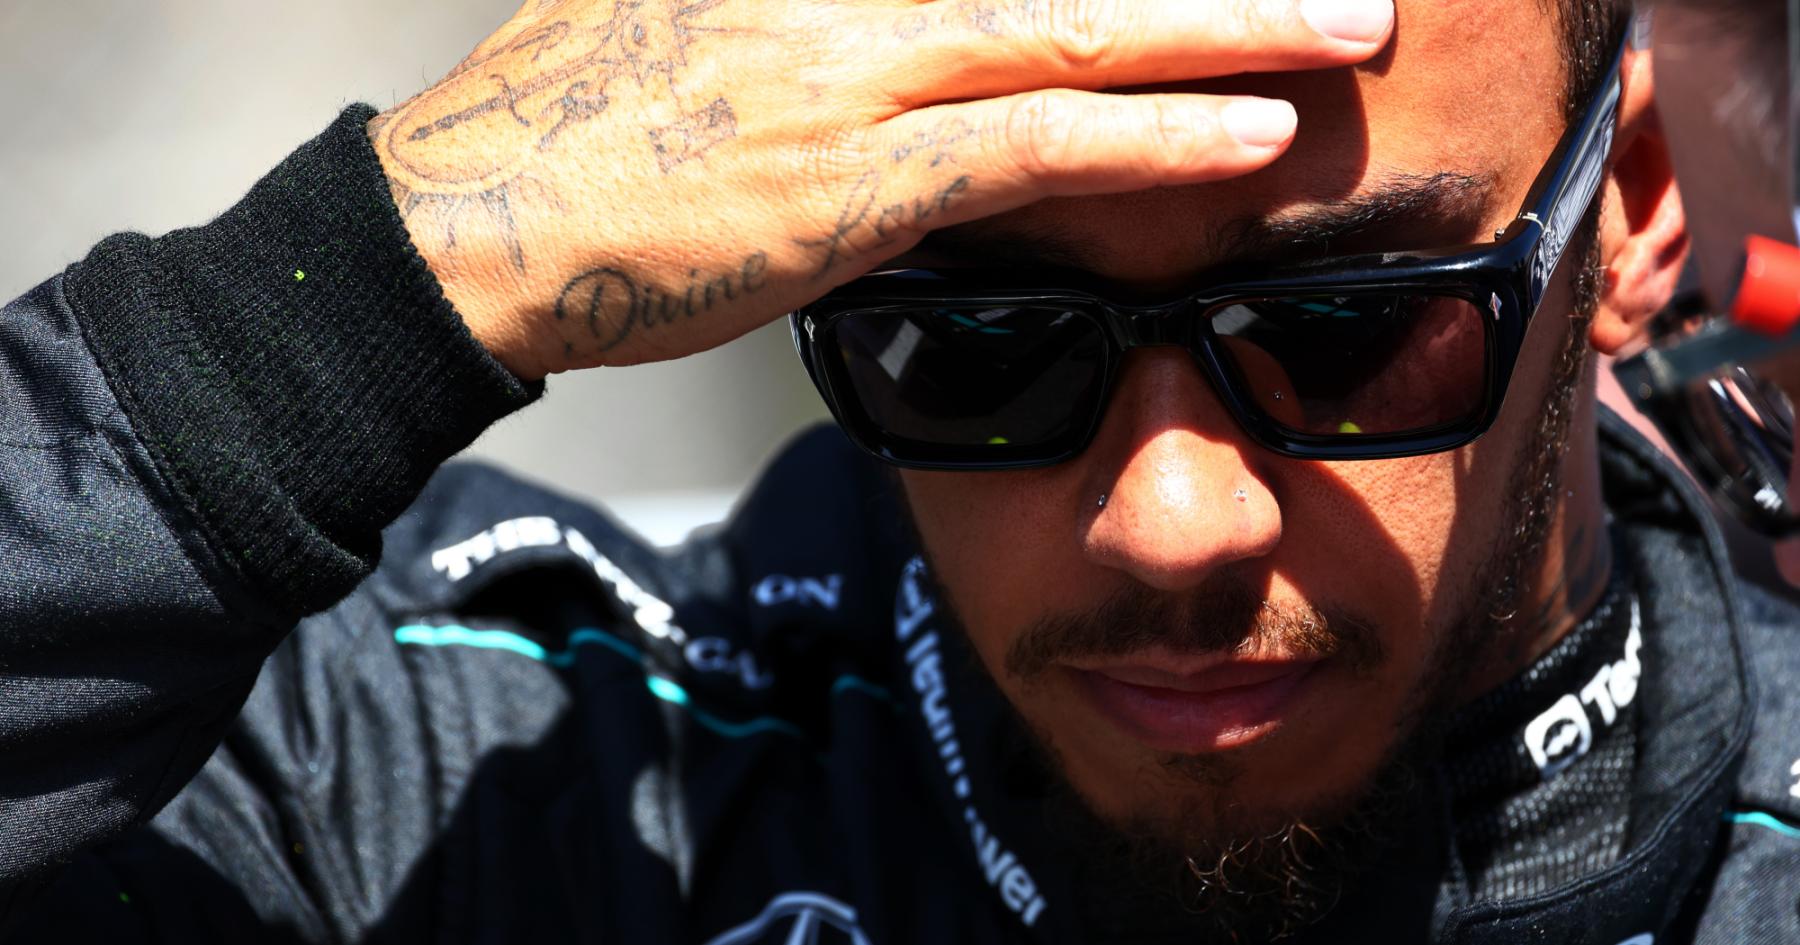 The Shocking Revelation Behind Hamilton's Recent Slump in F1